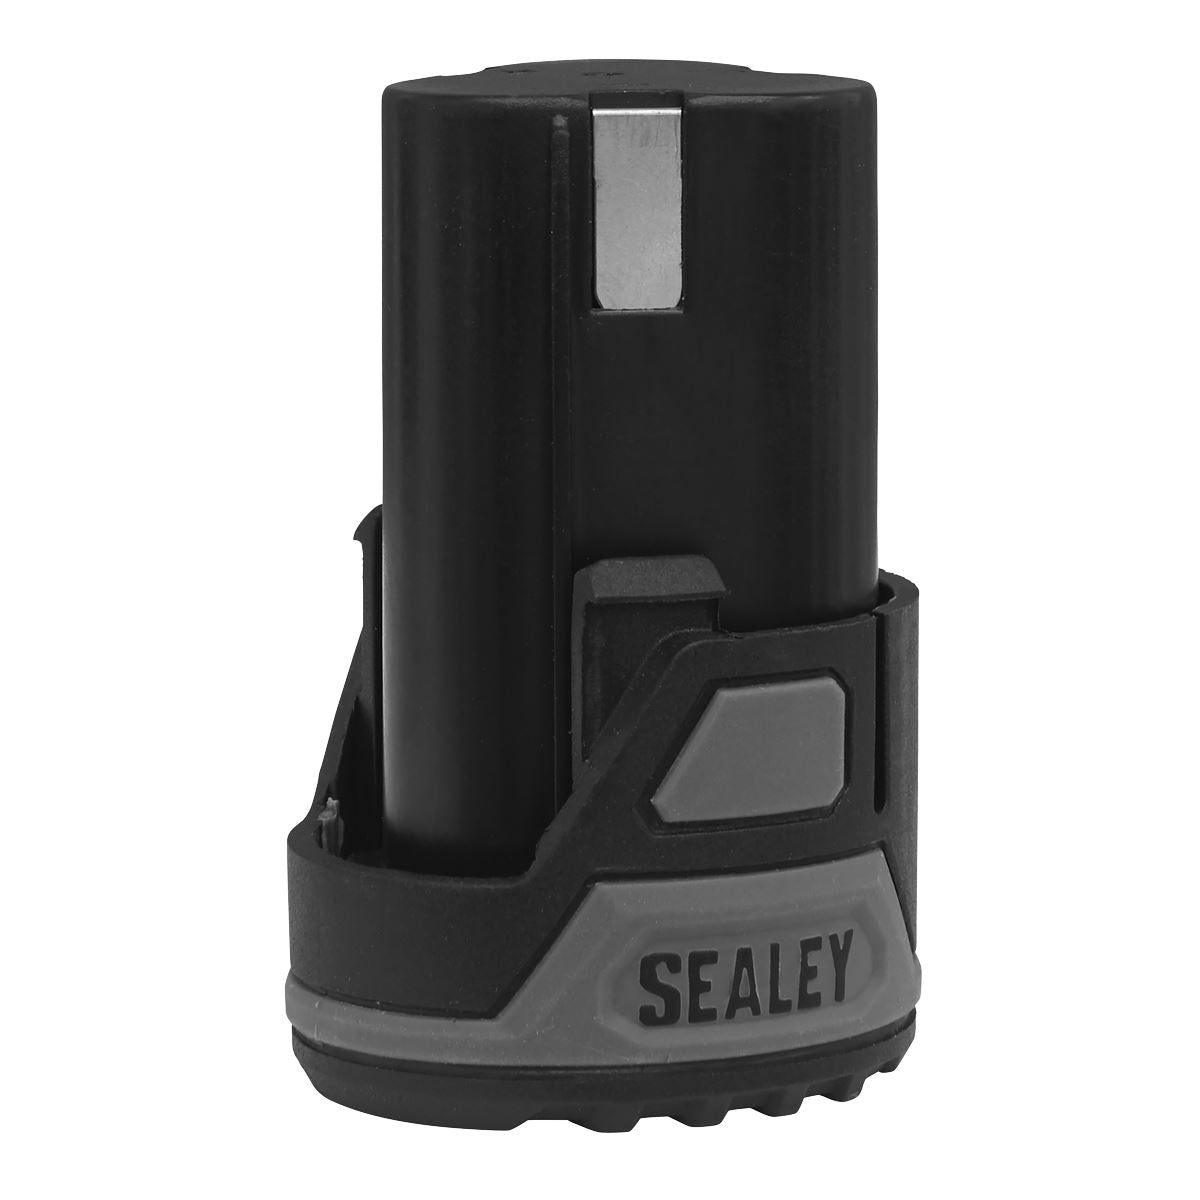 Sealey 2 x 10.8V SV10.8 Series Impact Wrench & Ratchet Wrench Kit